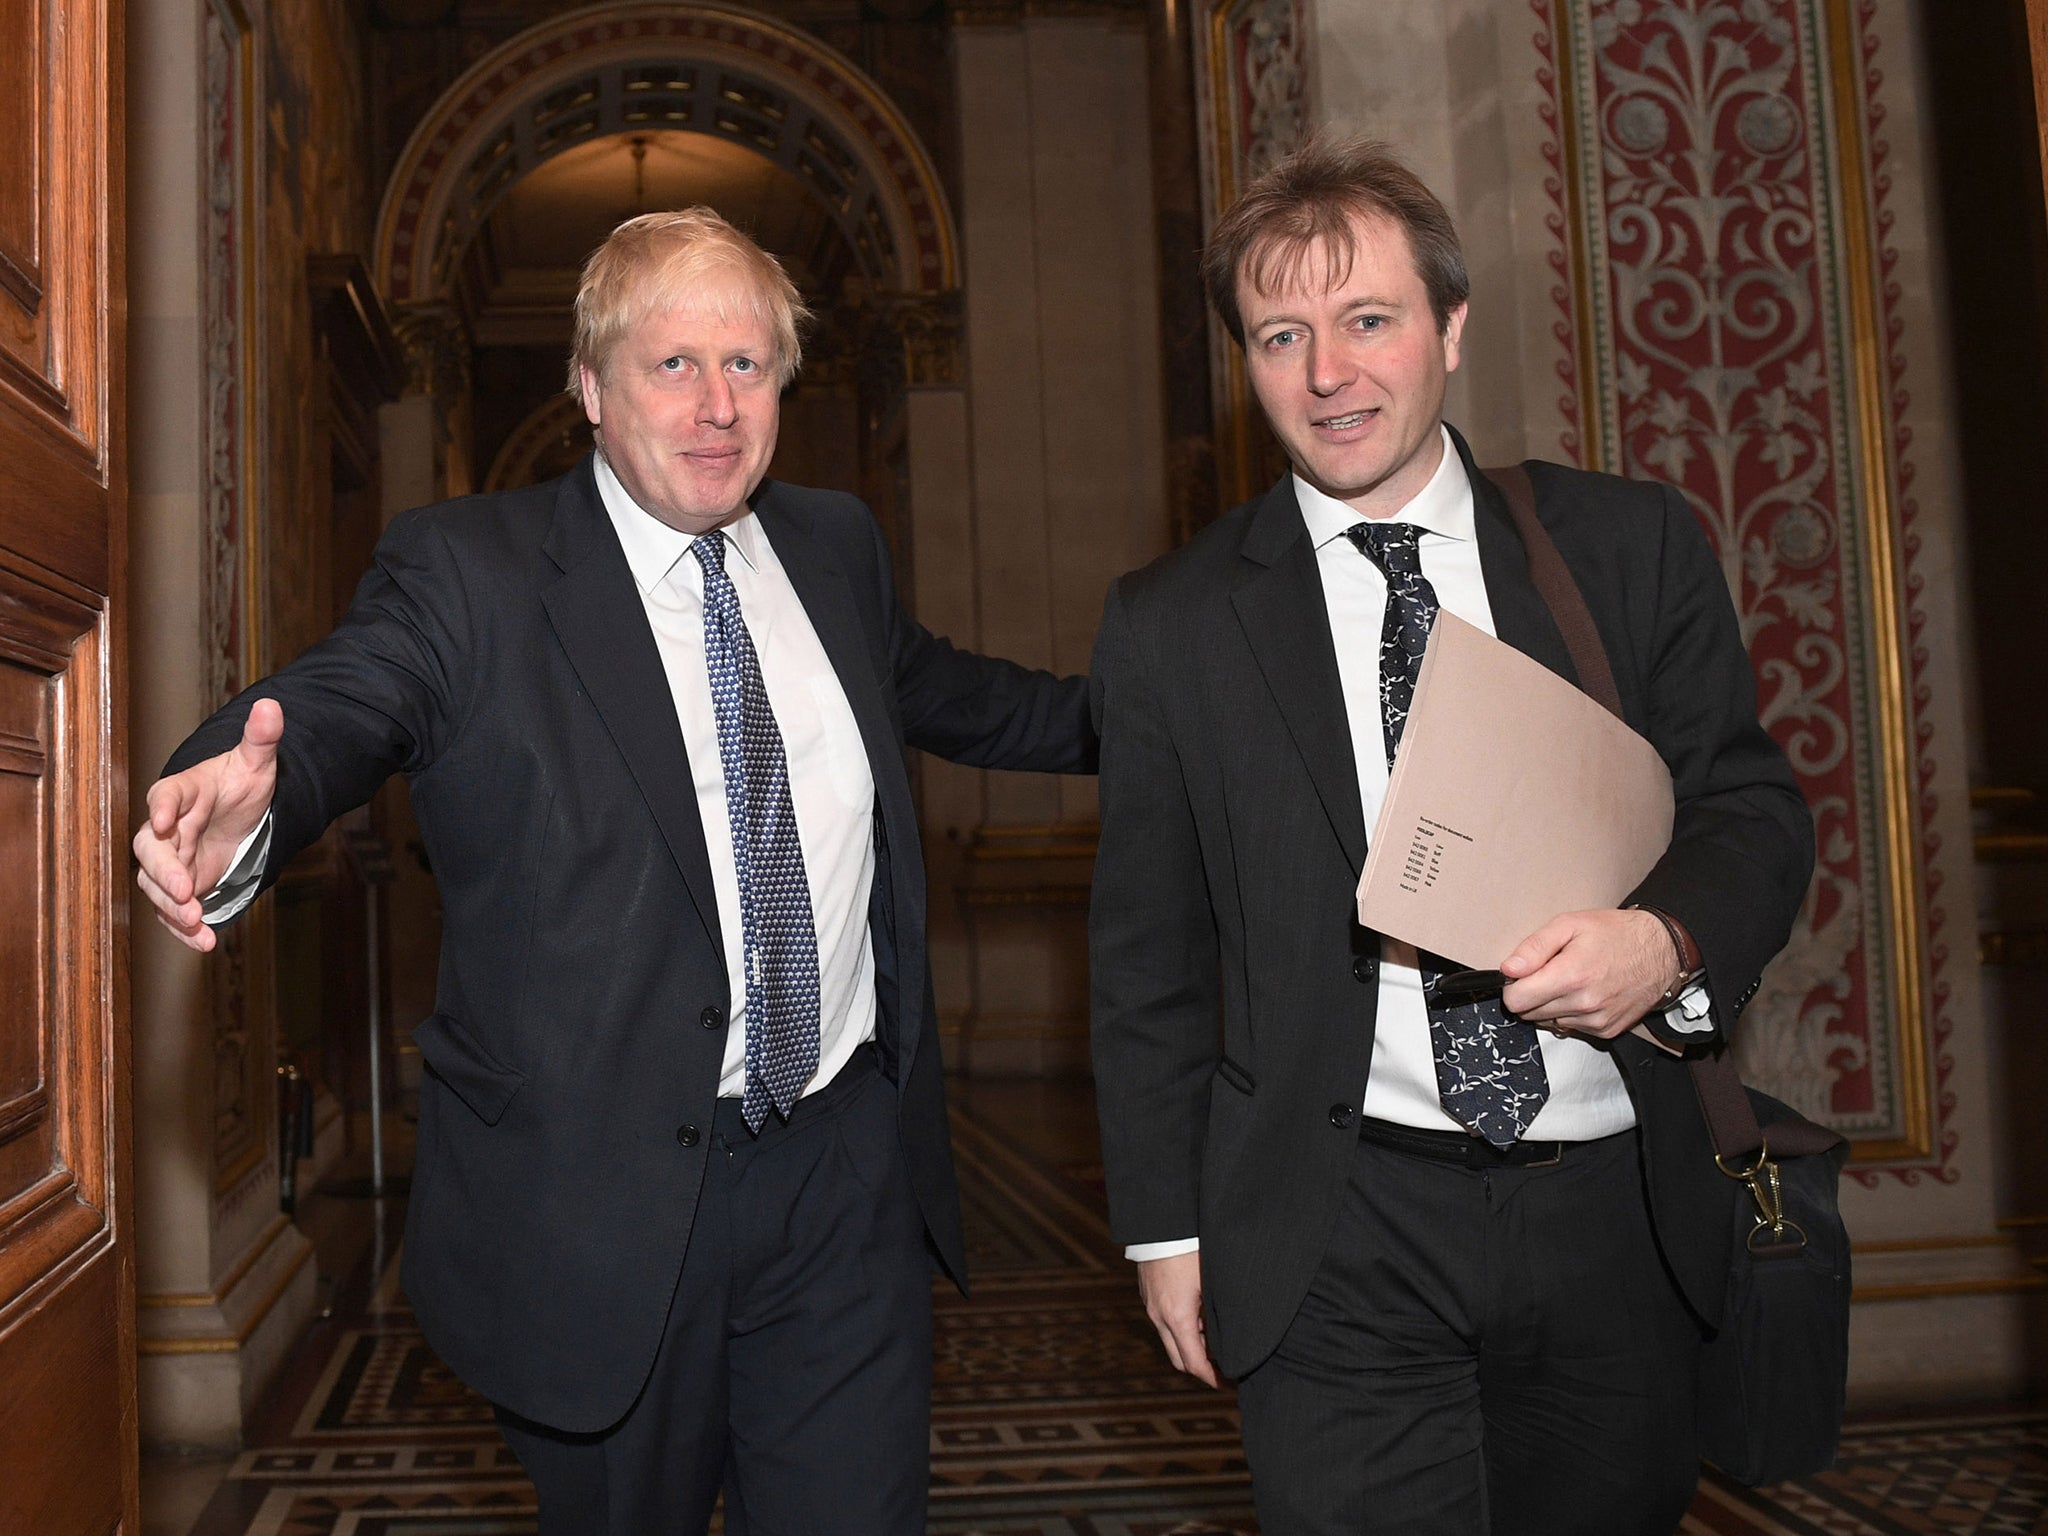 Foreign Secretary Boris Johnson has now met with Richard Ratcliffe, the husband of Nazanin Ratcliffe